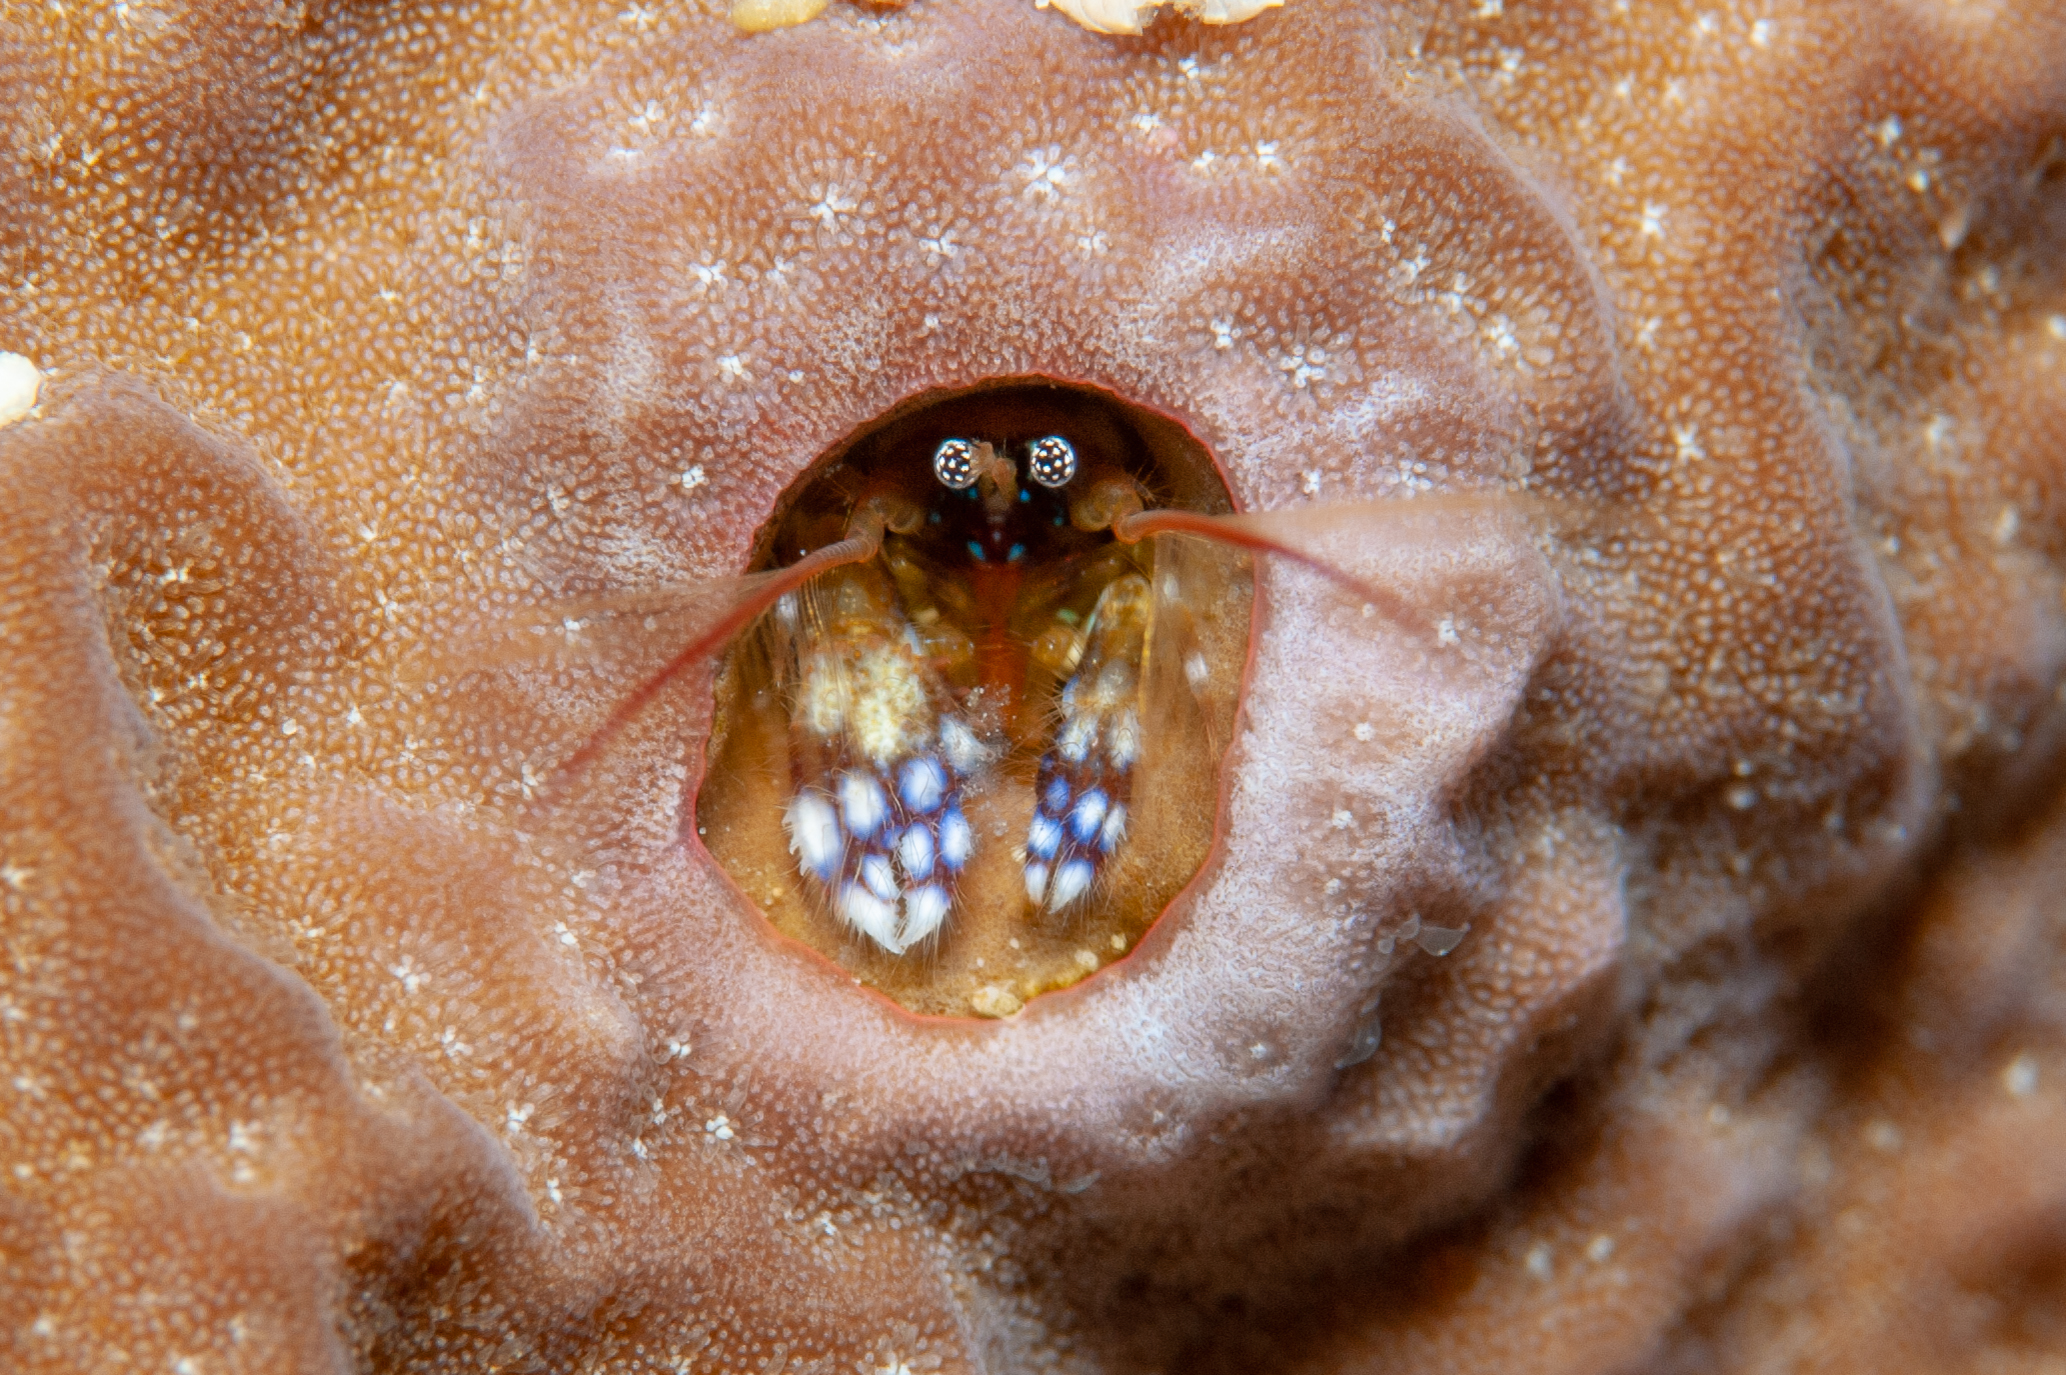 Morgan's coral hermit crab - Pagutritta morgani, Ake's Reef, Father's Reefs